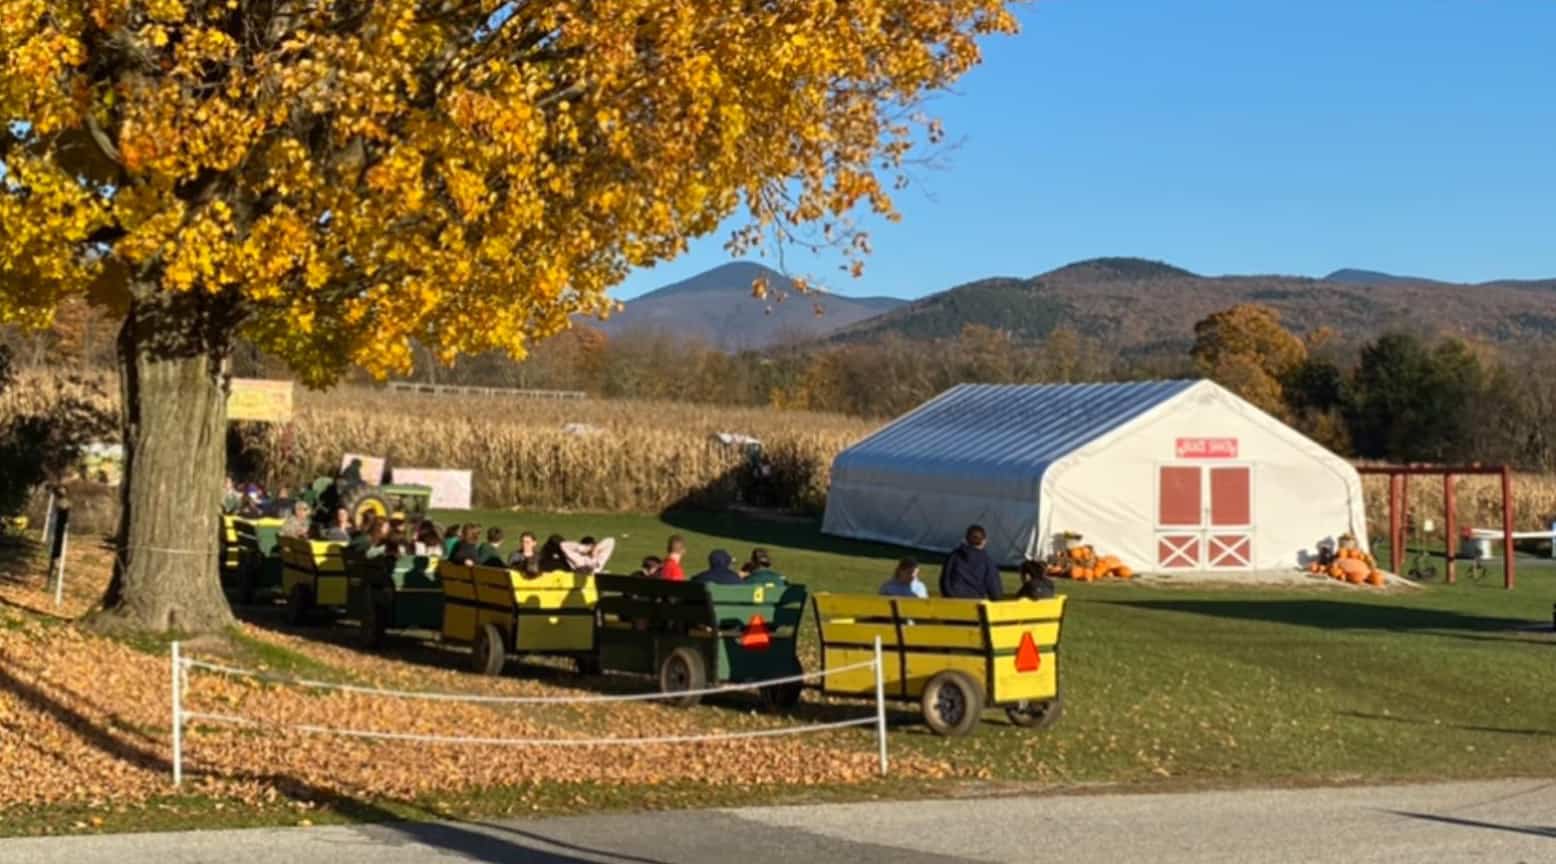 Hathaway Farm - Food Barn Tent and Wagon Train Ride - Cropped